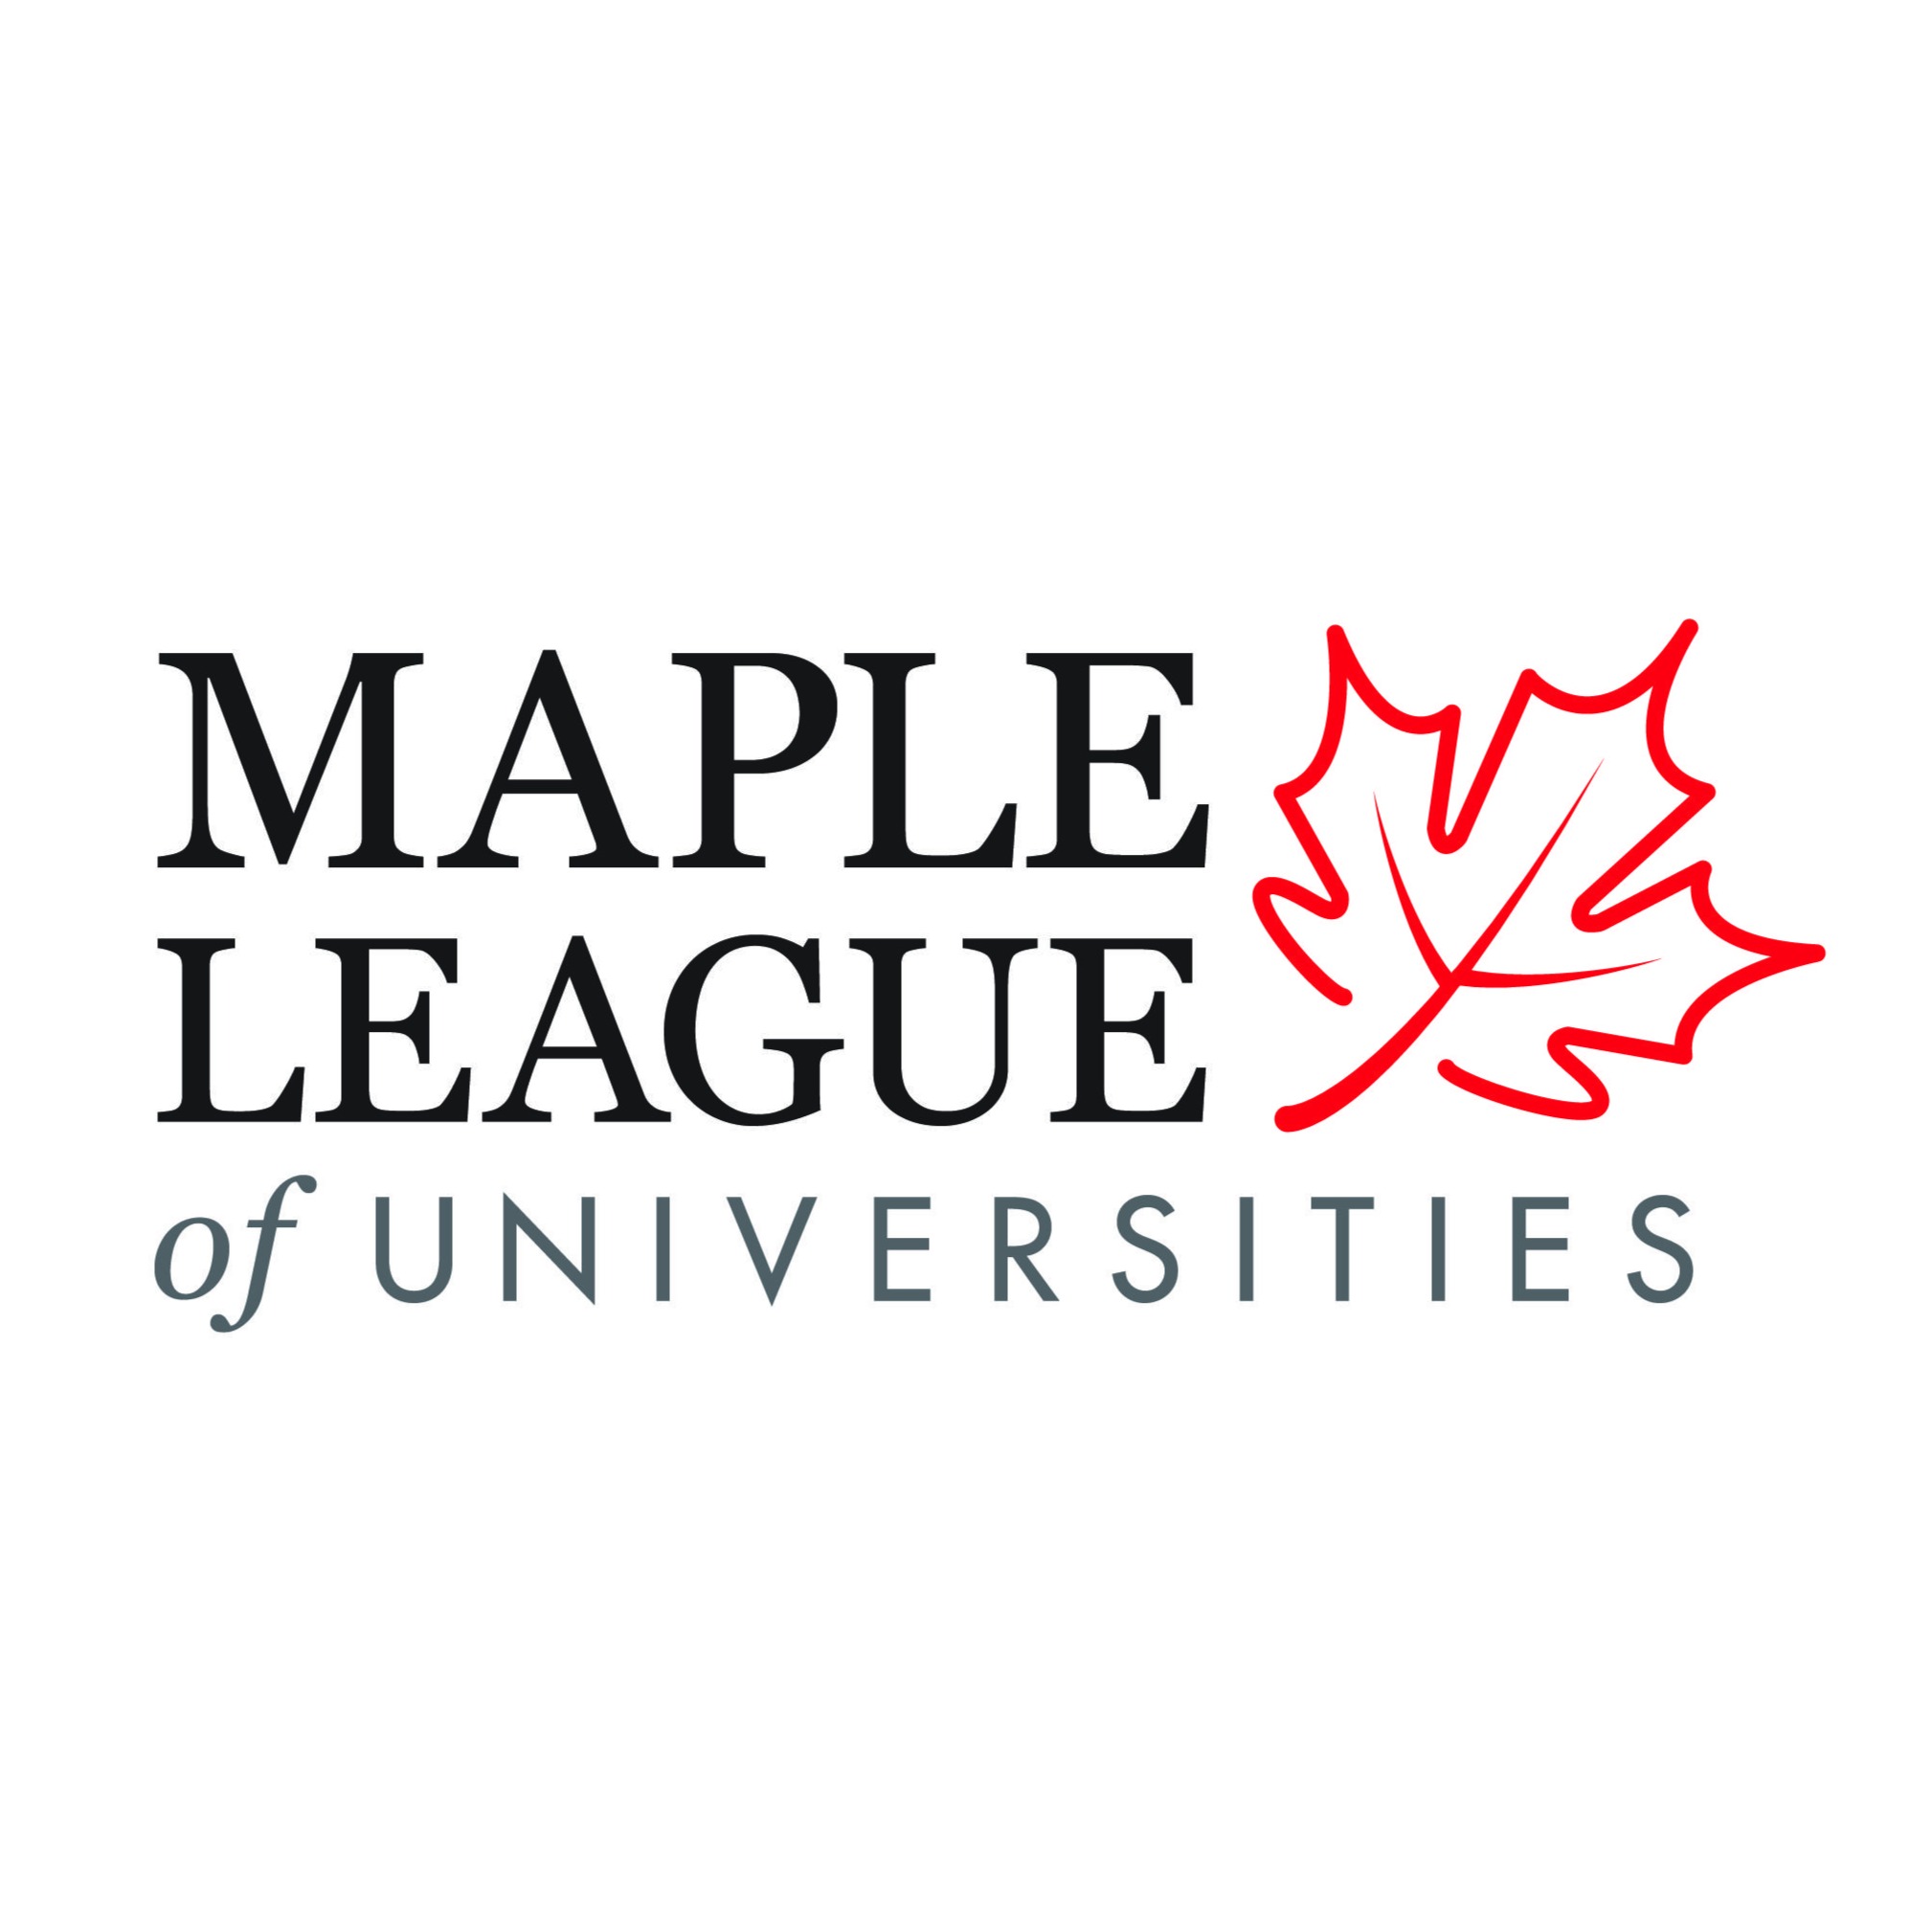 Maple League of Universities